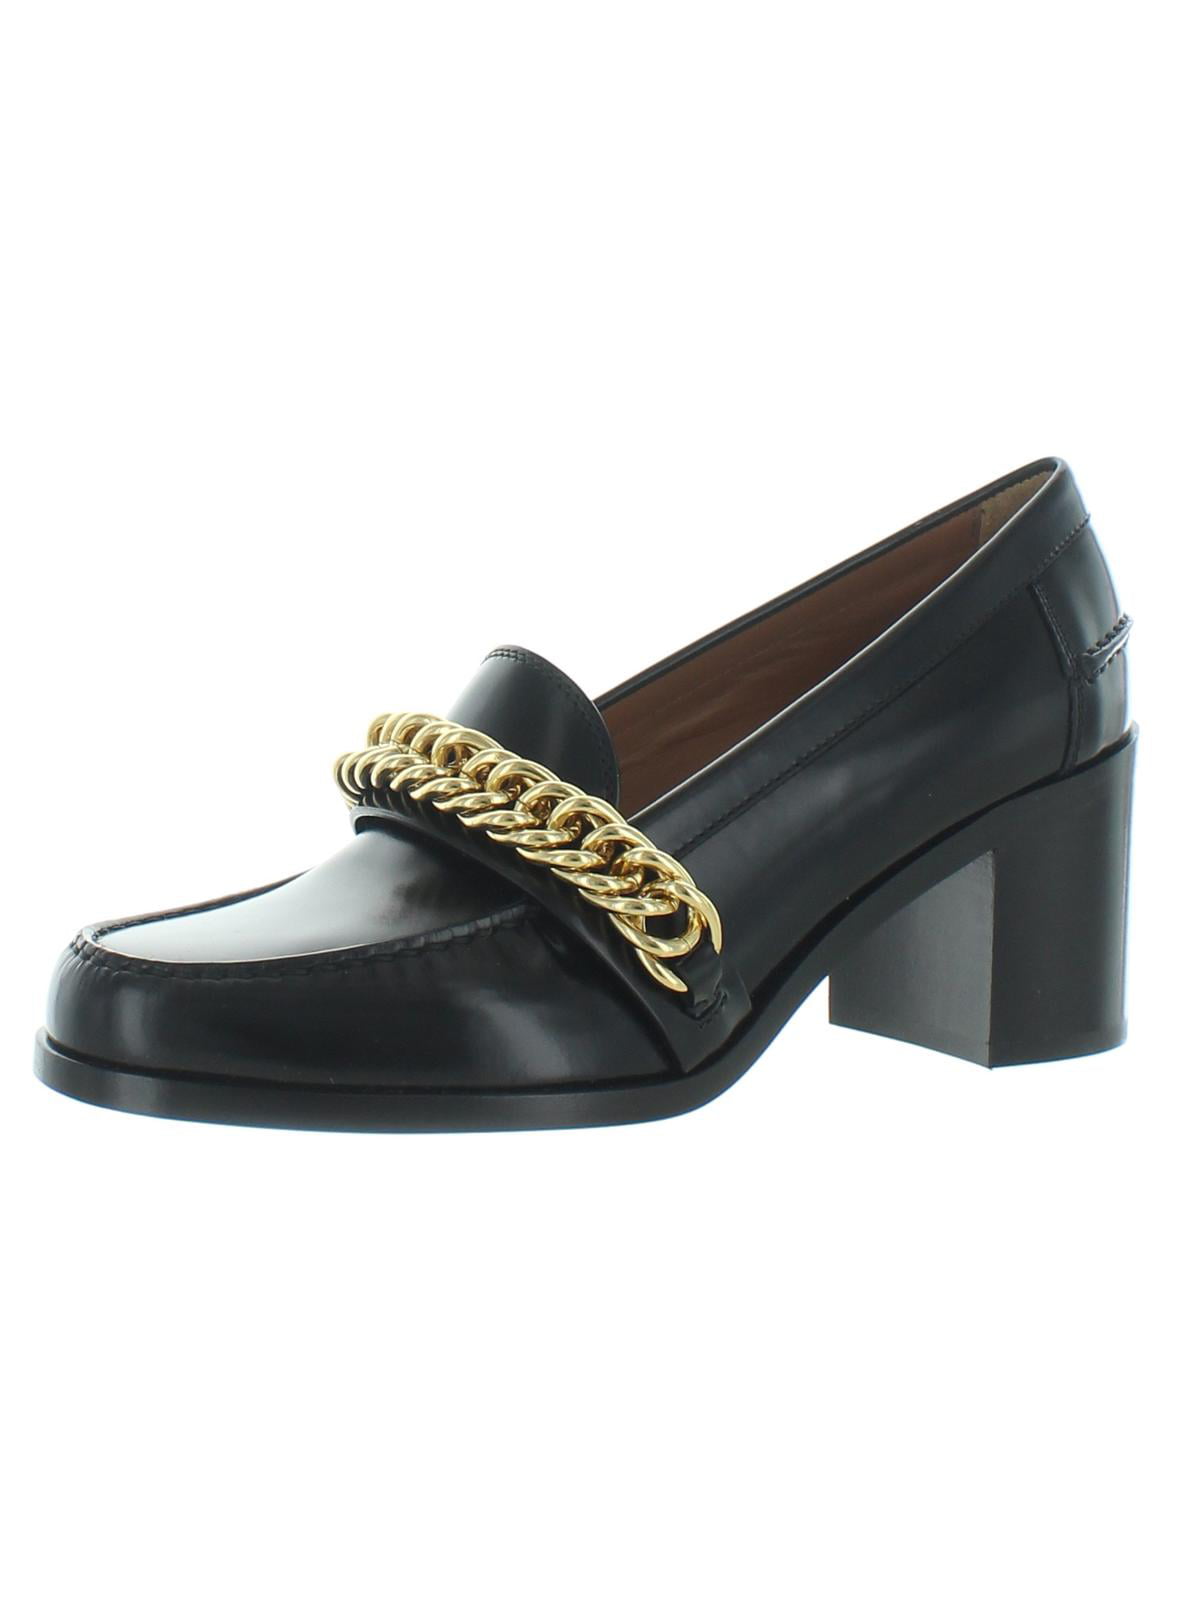 Givenchy Womens Chain Leather Slip On Heels Black 38 Medium (B,M) -